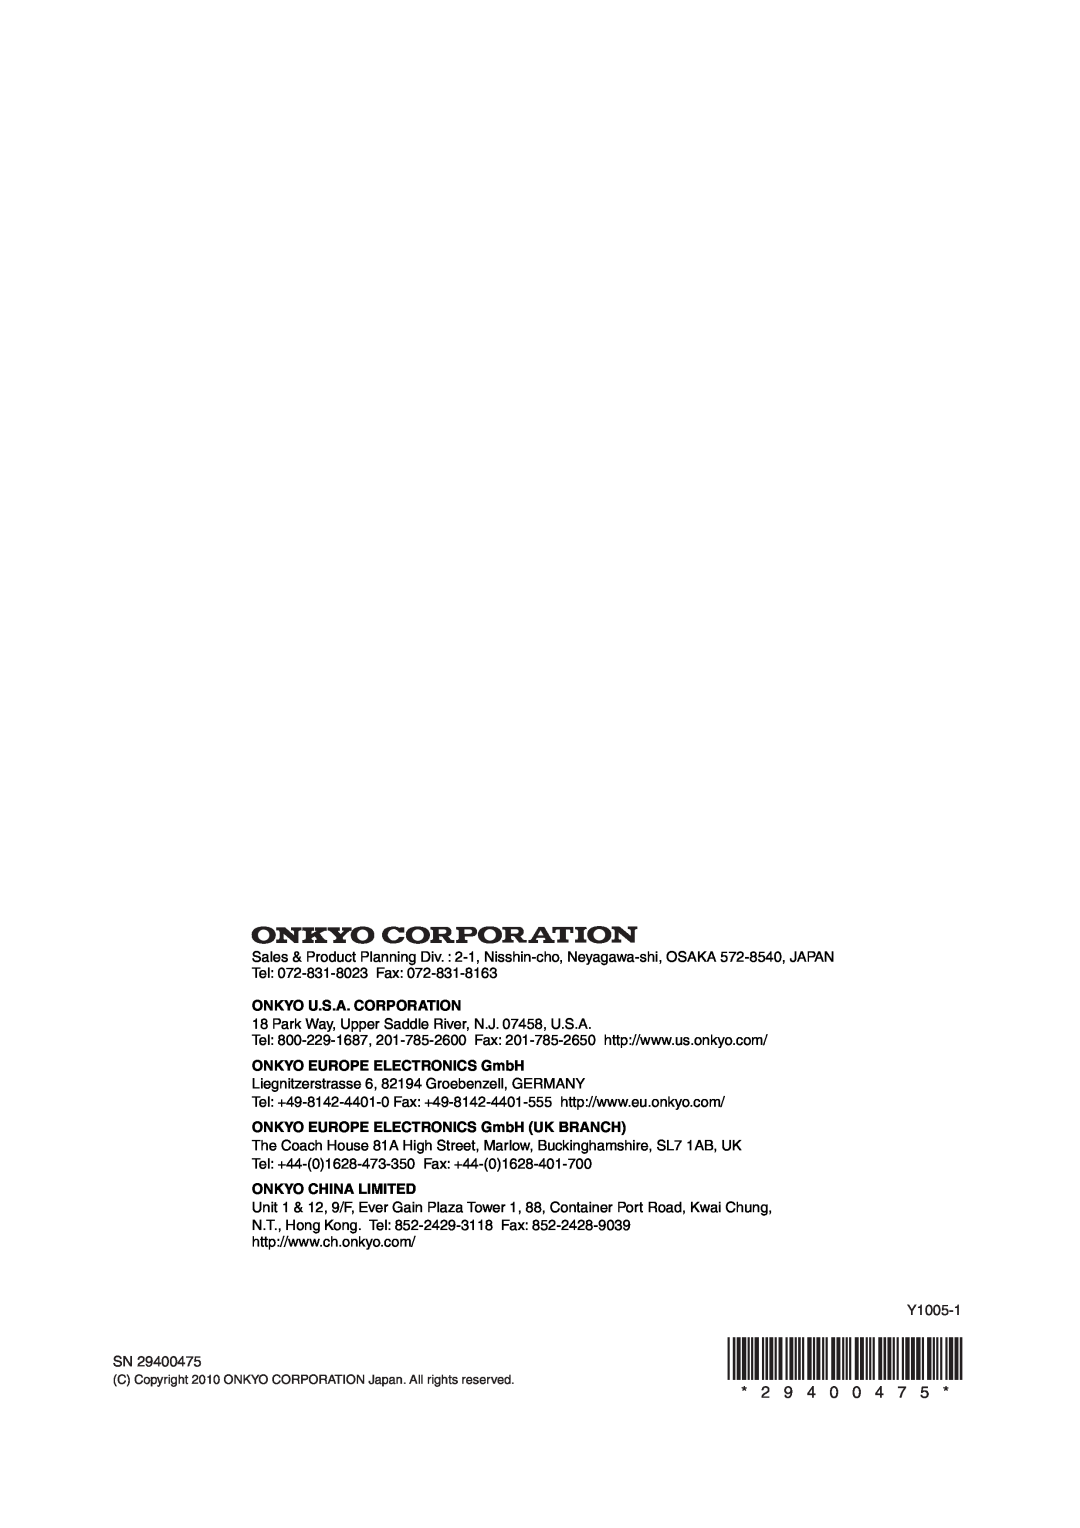 Onkyo AVX-280 instruction manual Onkyo U.S.A. Corporation, ONKYO EUROPE ELECTRONICS GmbH UK BRANCH, Onkyo China Limited 